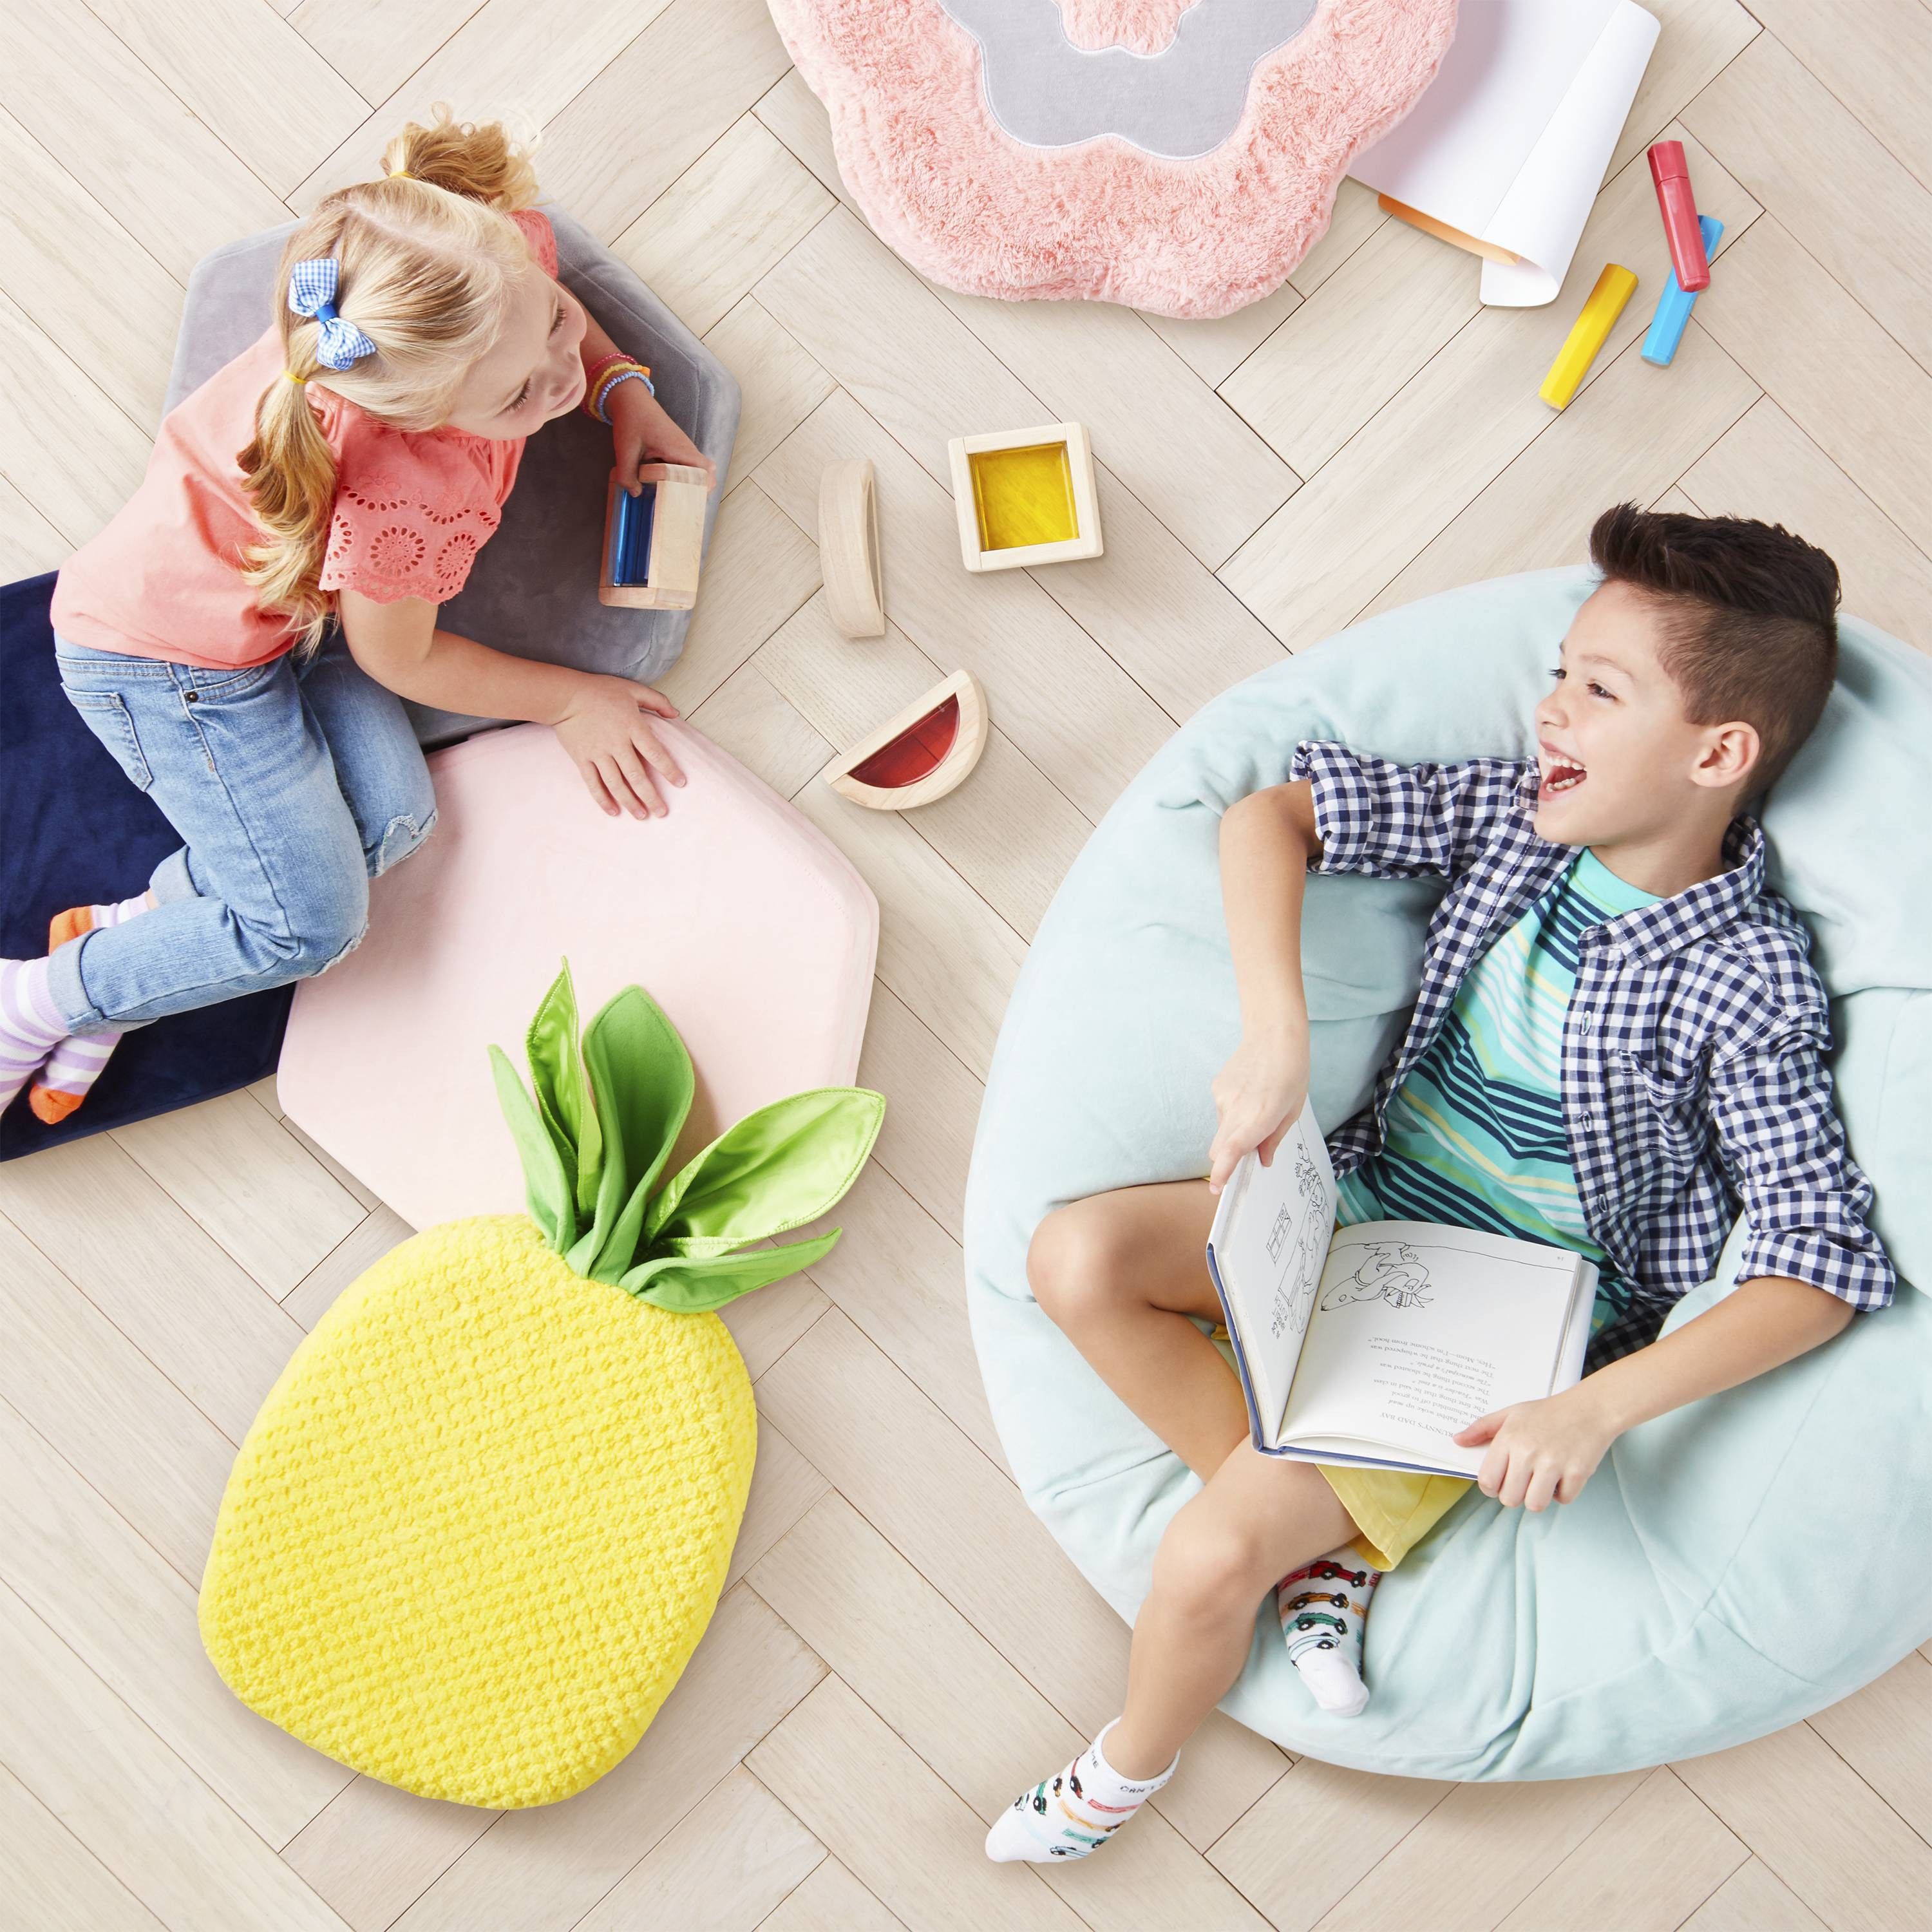 Target Debuts Pillowfort Furniture Line For Kids With Sensory Sensitivities